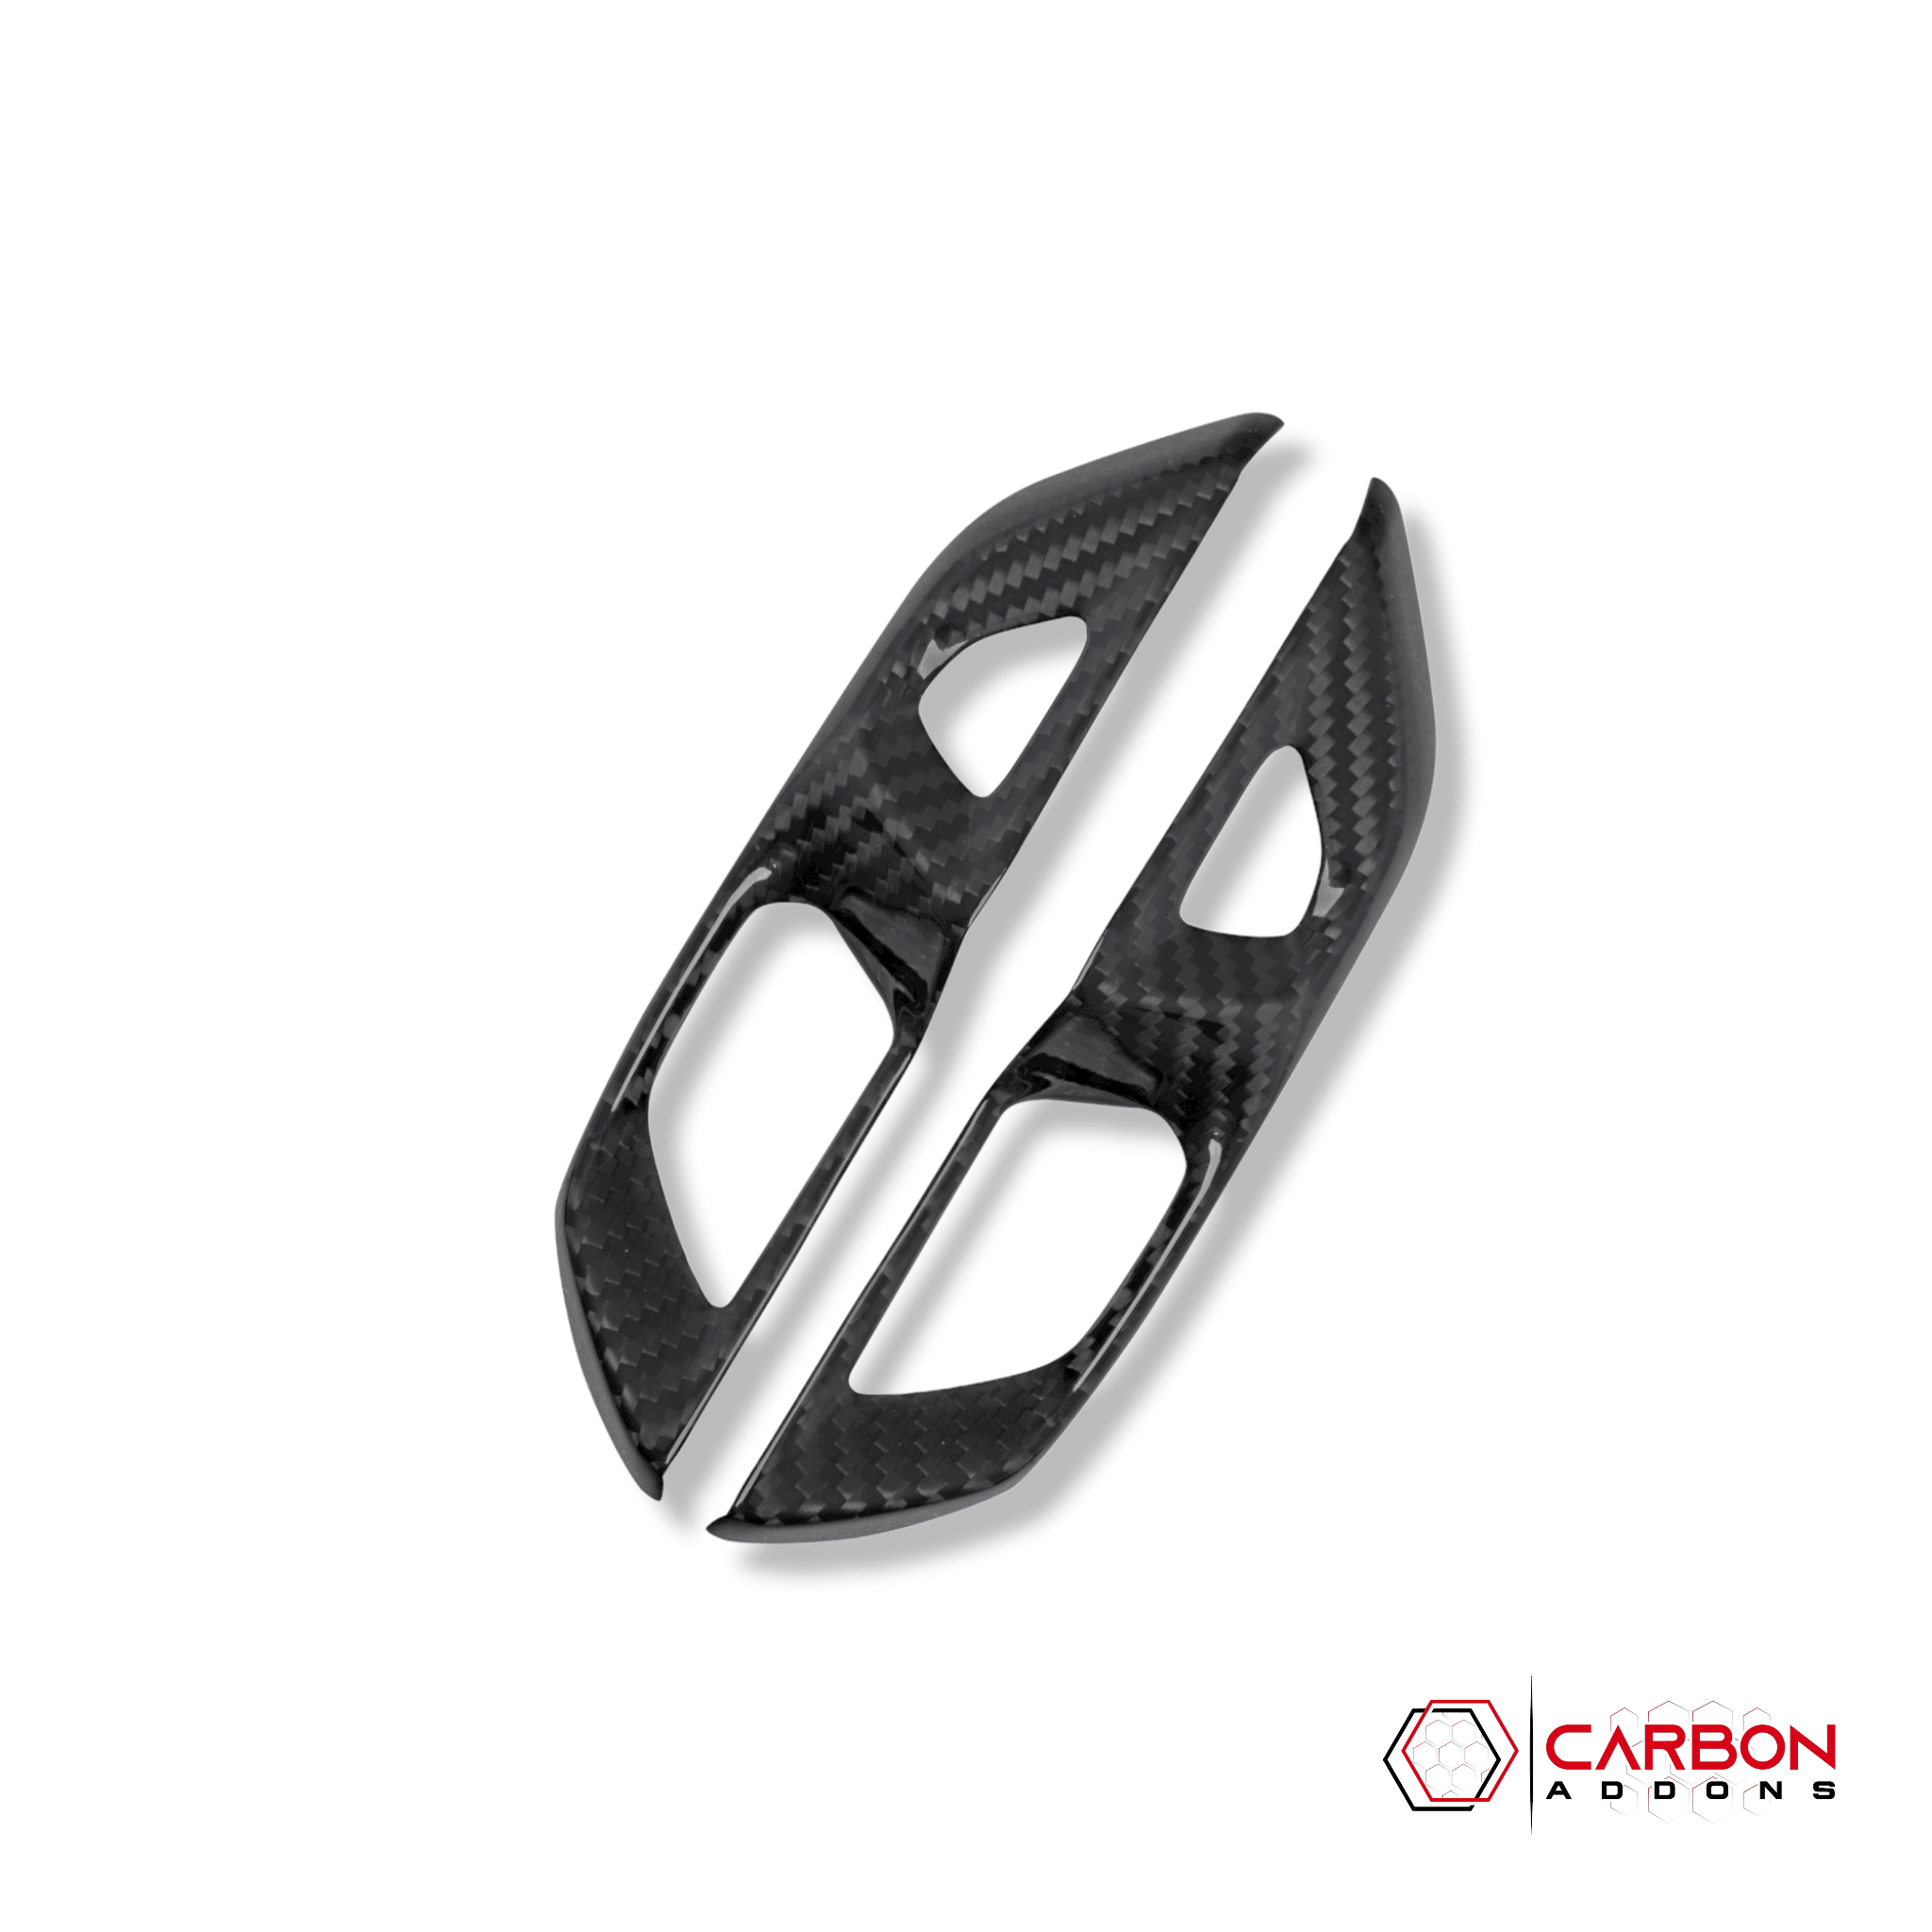 [Set] C8 Corvette Real Carbon Fiber Lock Trim Cover - carbonaddons Carbon Fiber Parts, Accessories, Upgrades, Mods